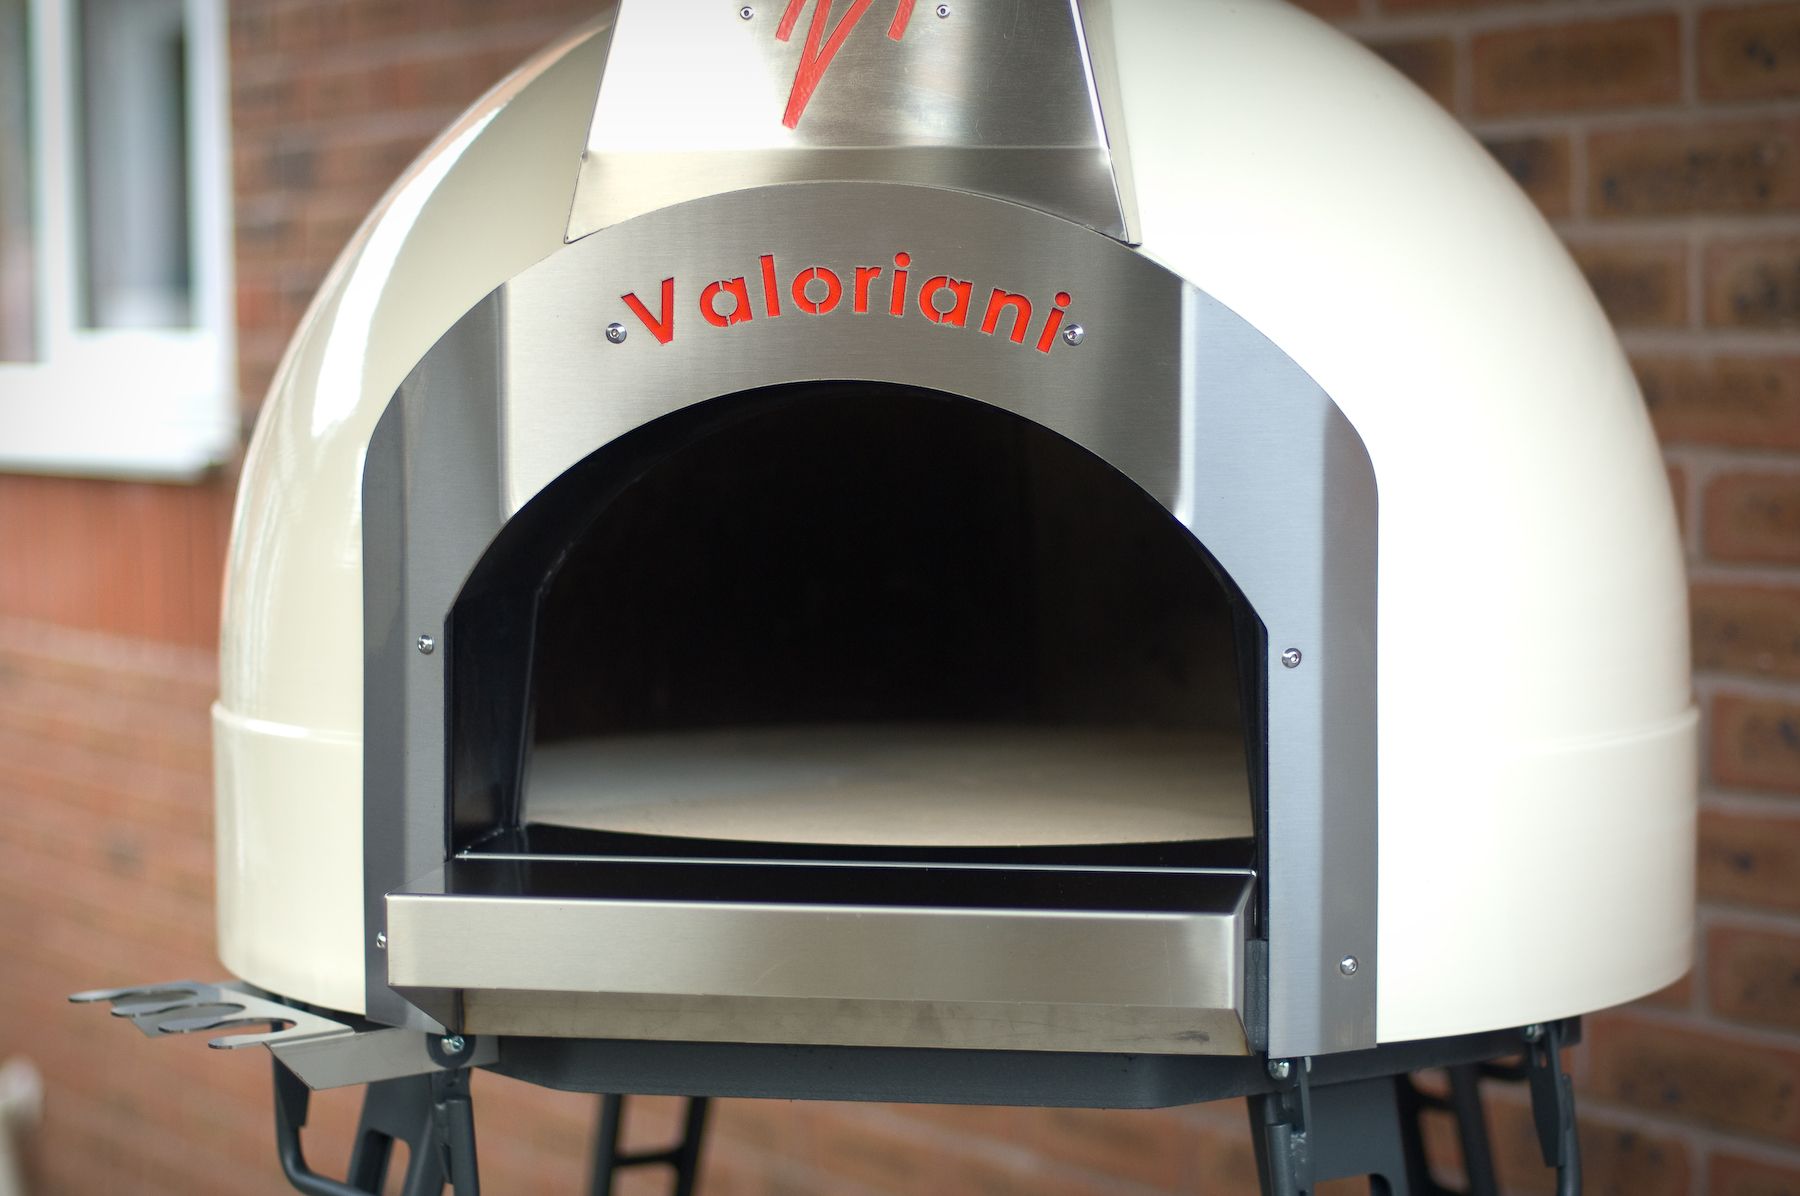 The Fornino 60 baby pizza oven from Valoriani